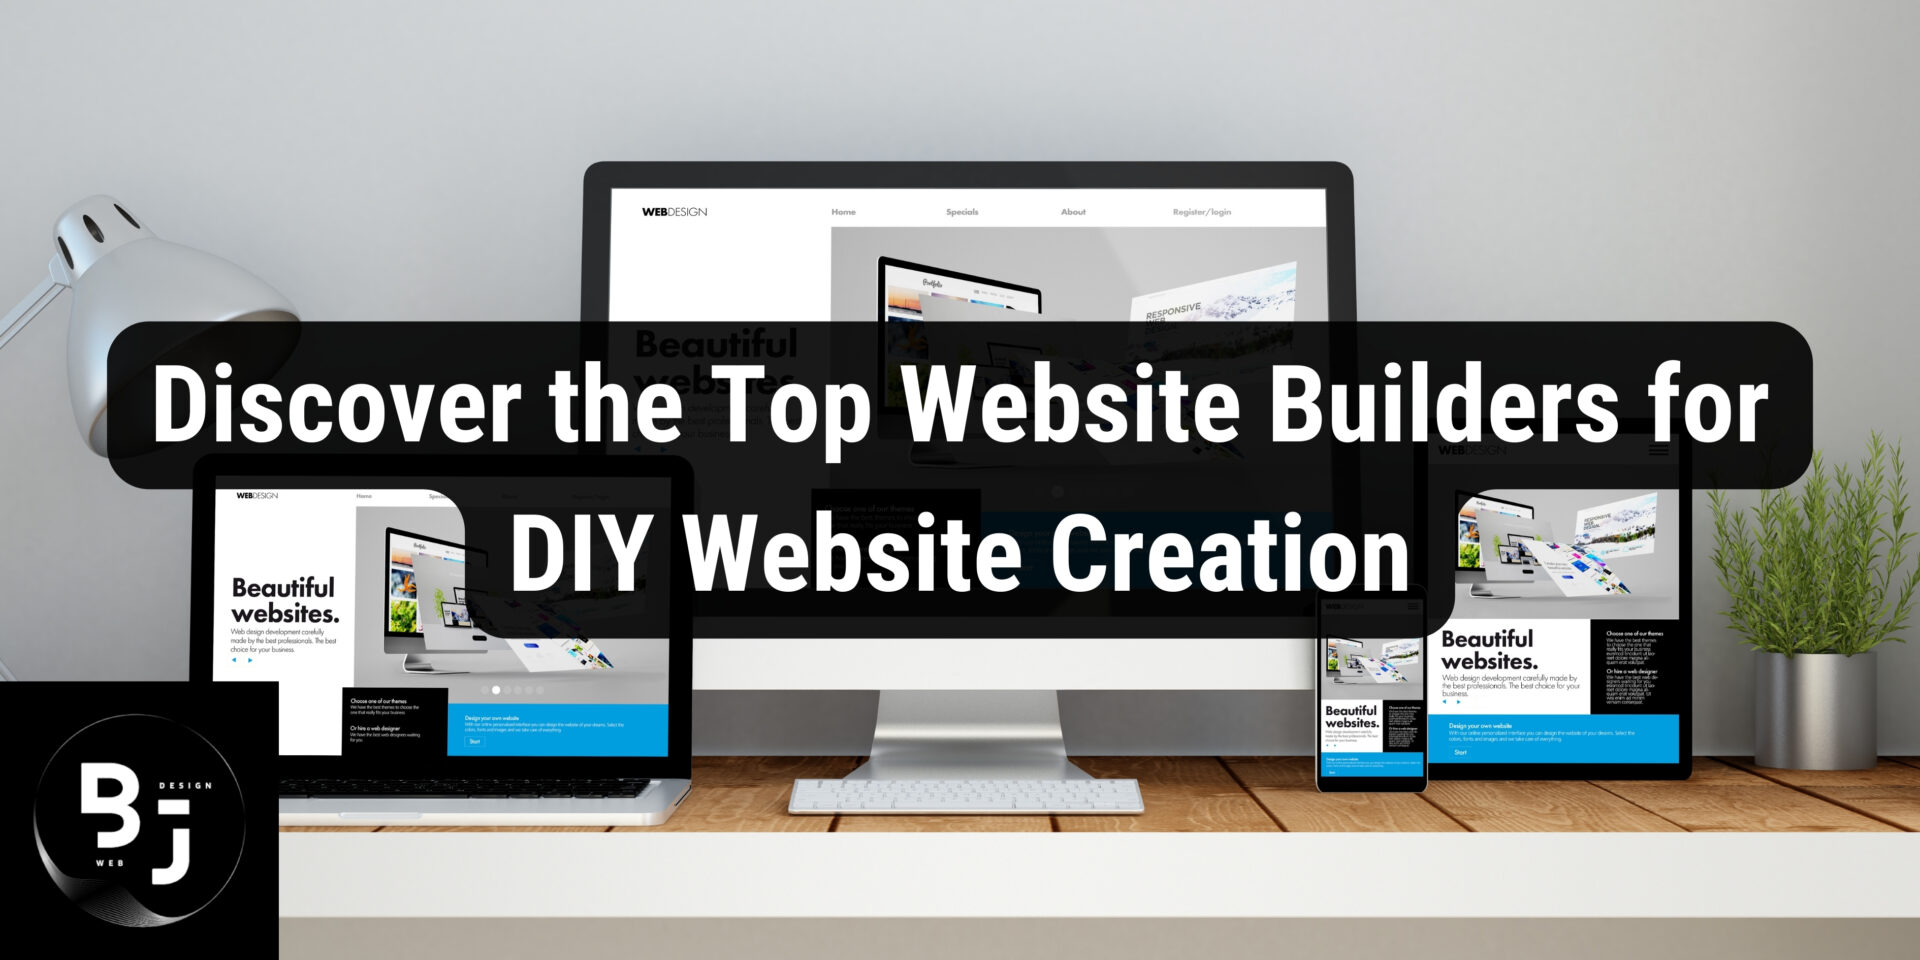 Discover the Top Website Builders for DIY Website Creation - Big J Web Design Australia, Central Coast, Northern Rivers, Sydney, Newcastle